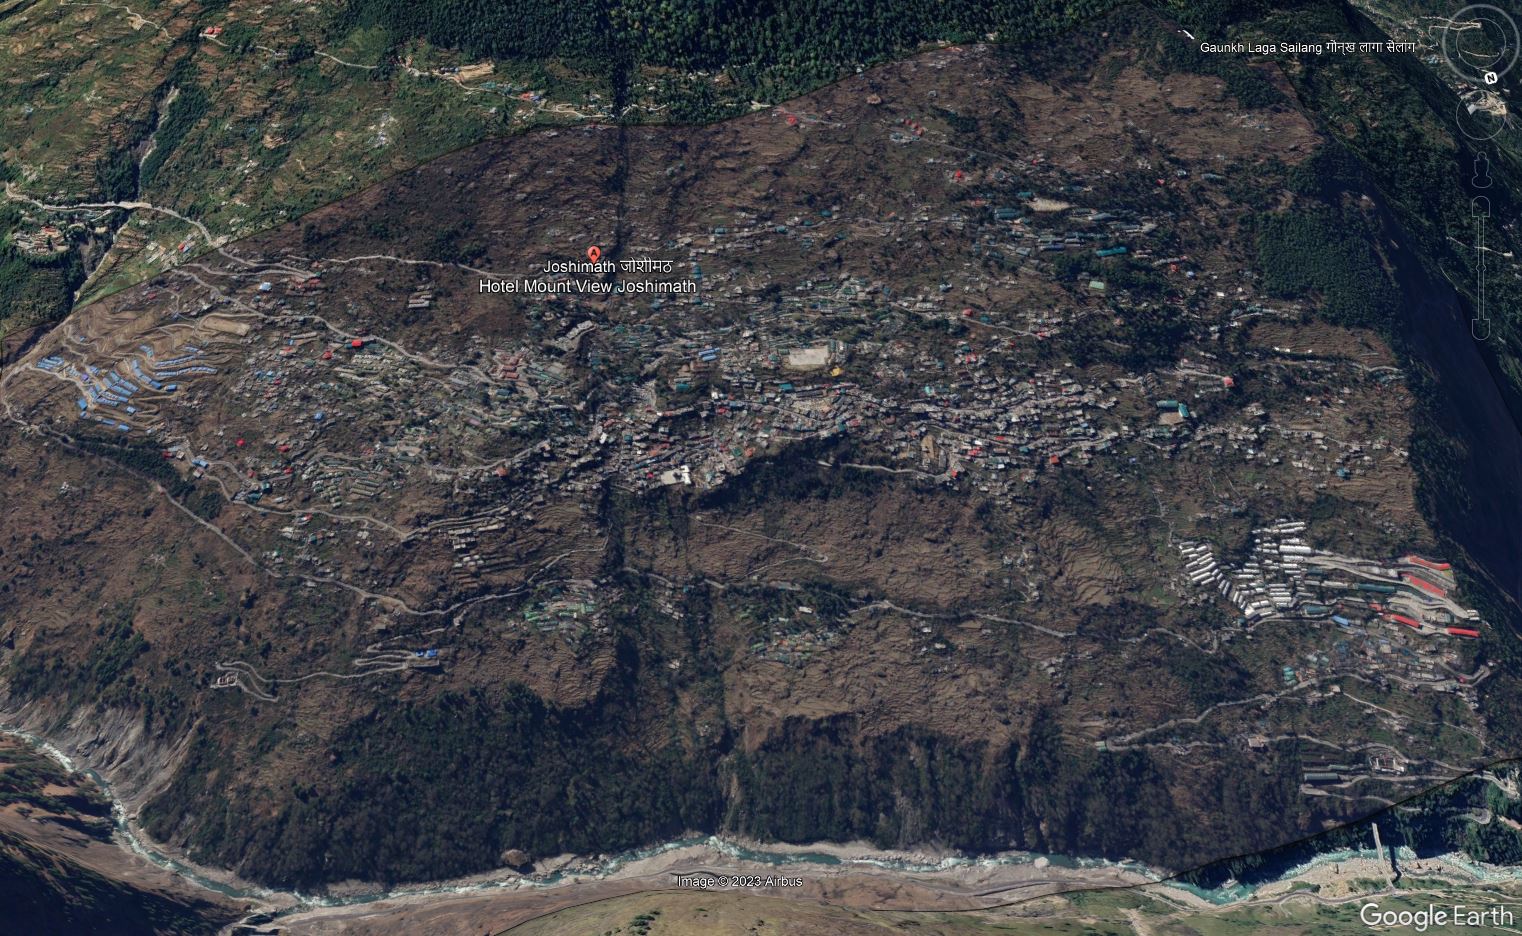 High resolution image of the Joshimath landslide draped onto the Google Earth DEM. 